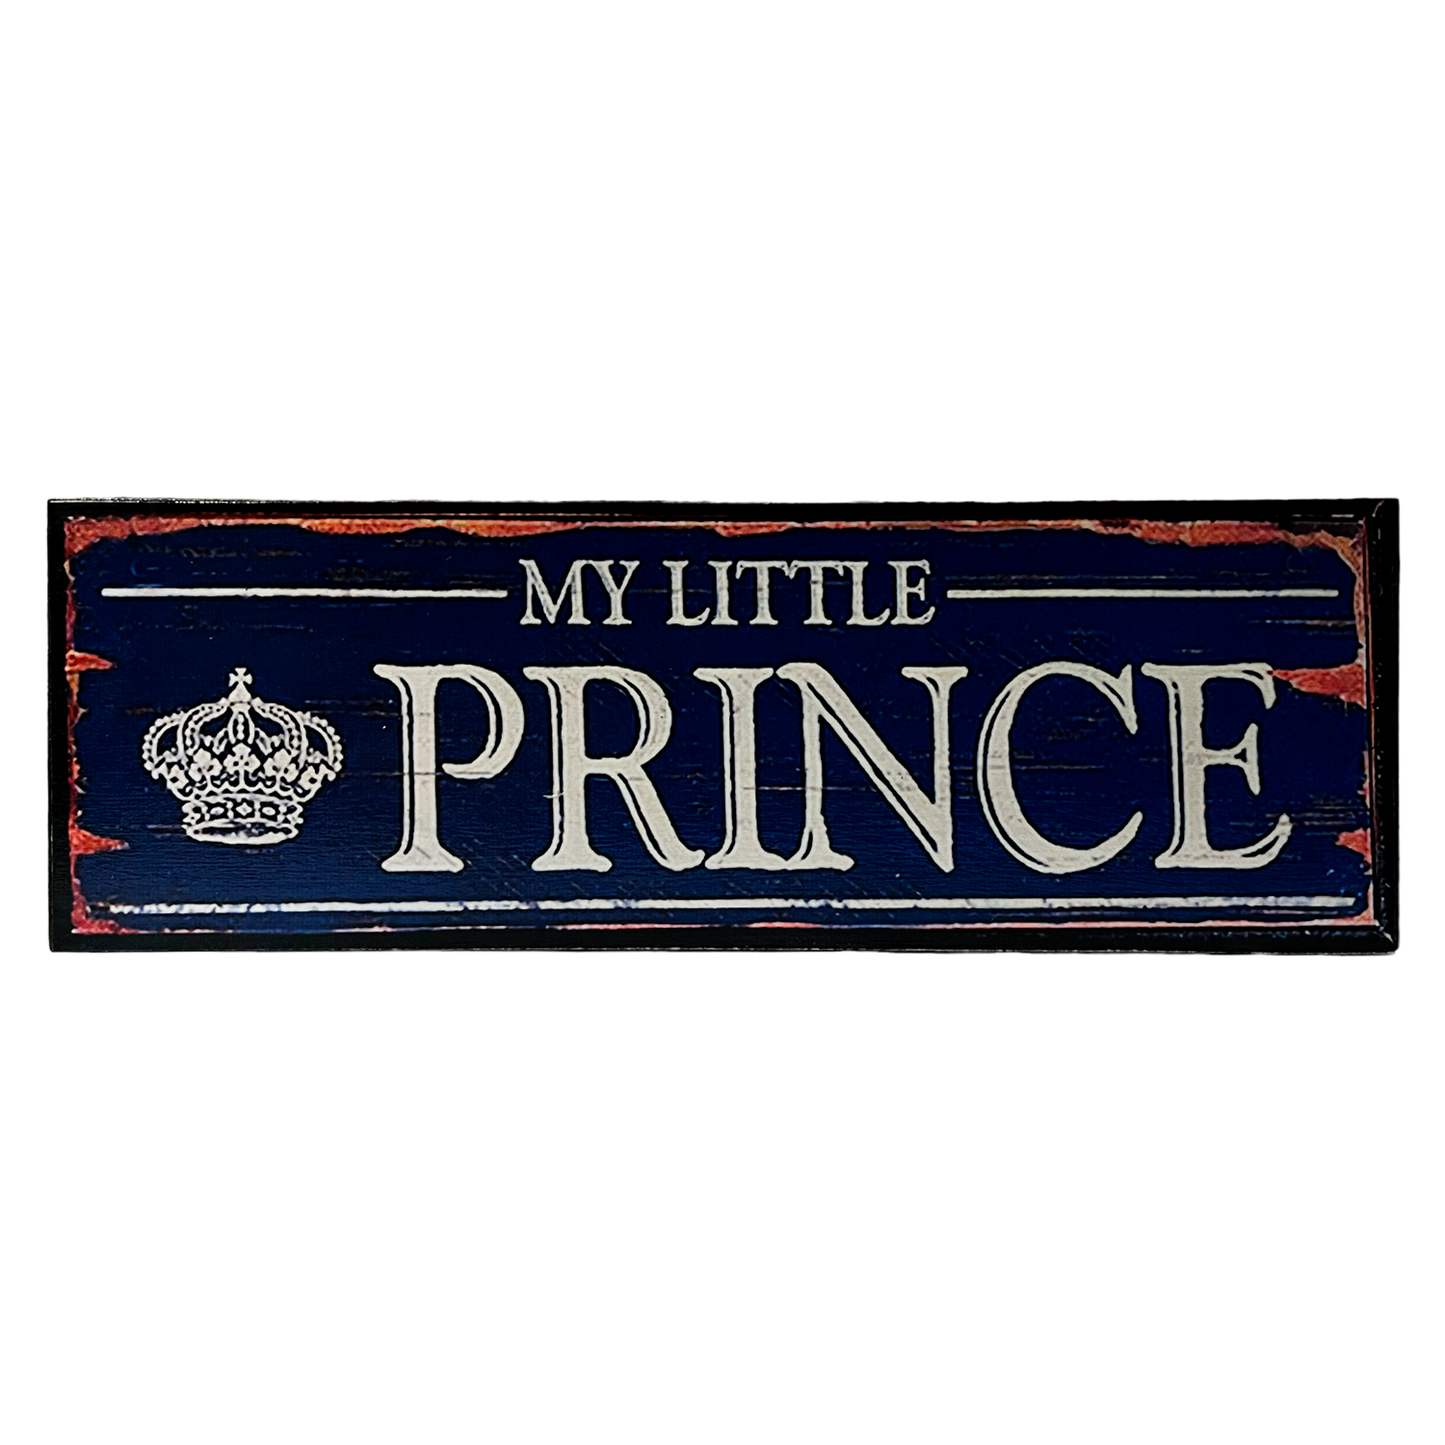 Afiche "My little prince"A